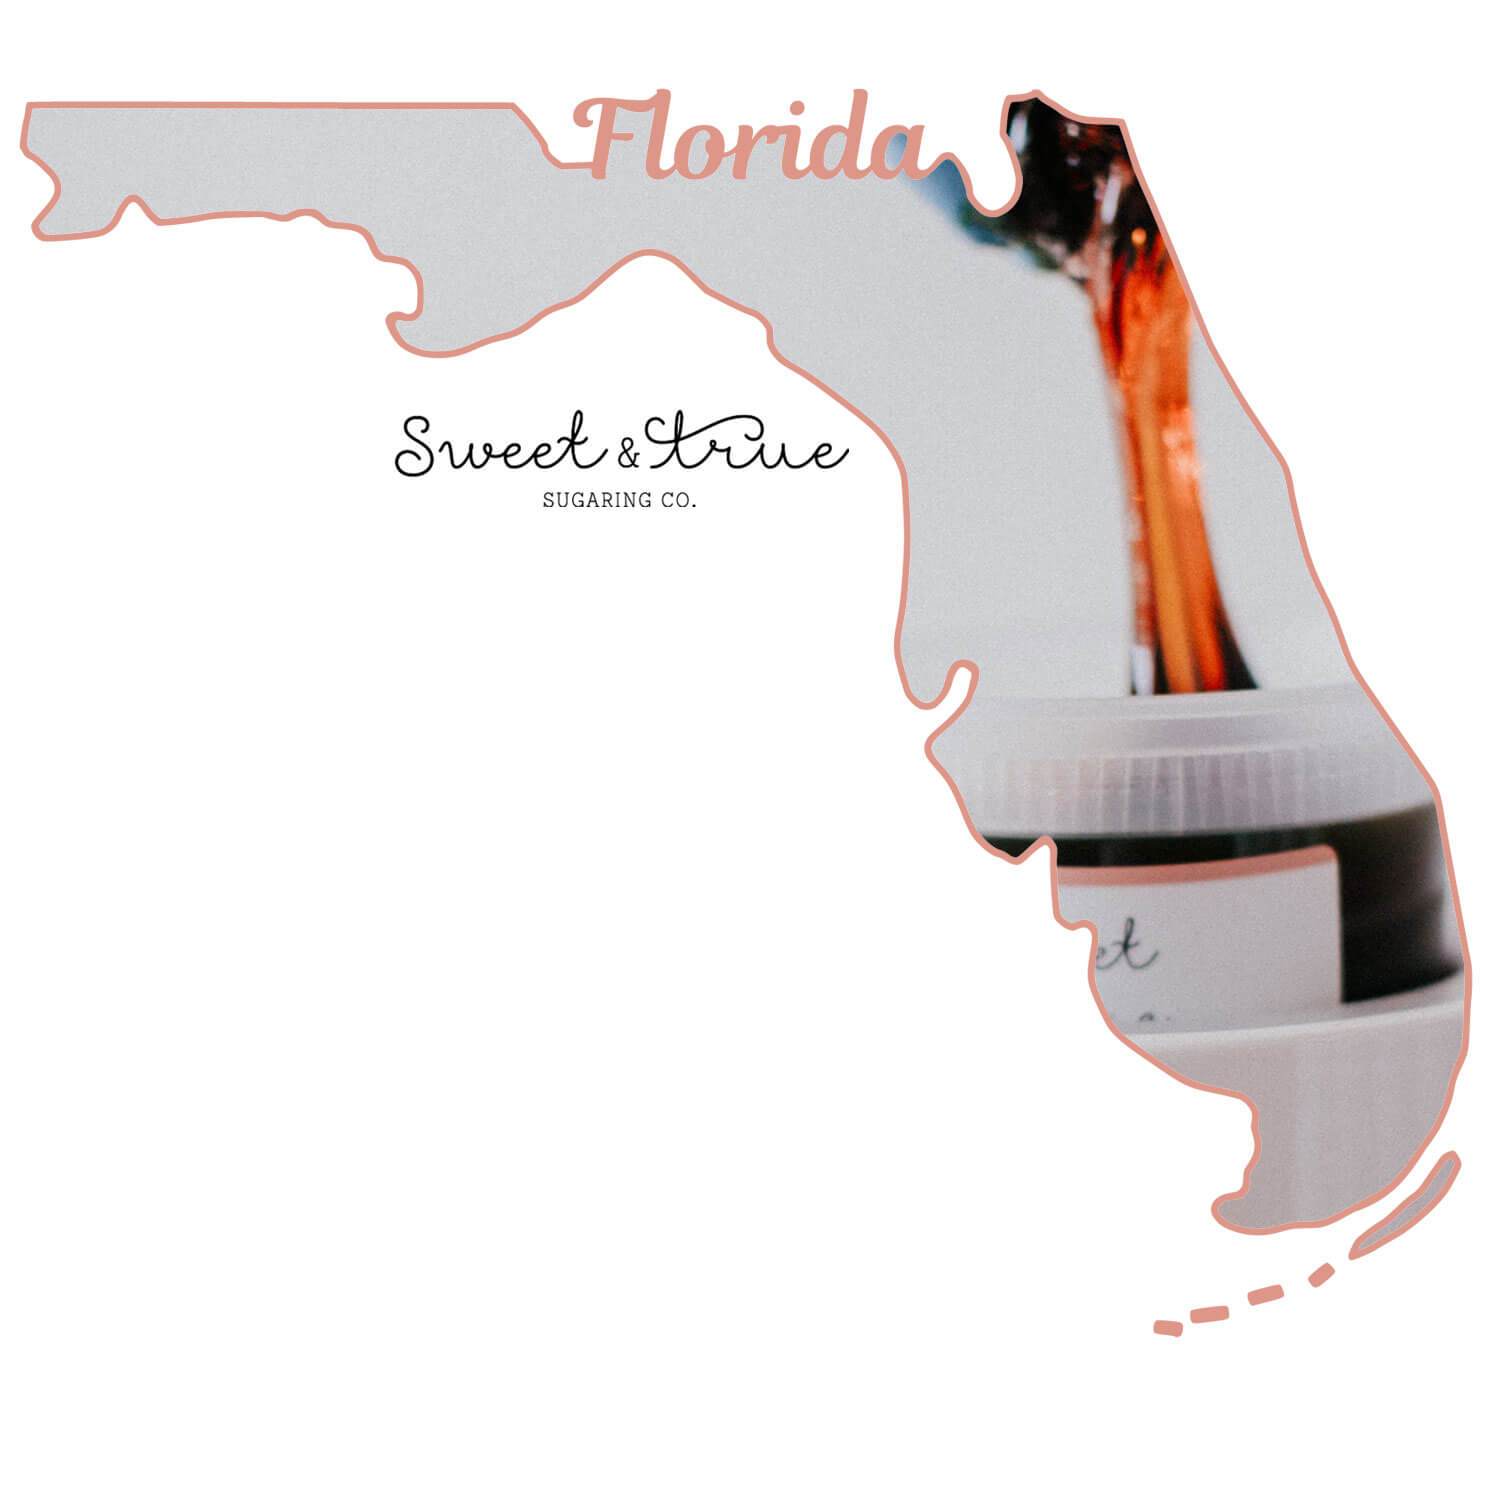 Tampa, Florida - Sugaring Certificate Course